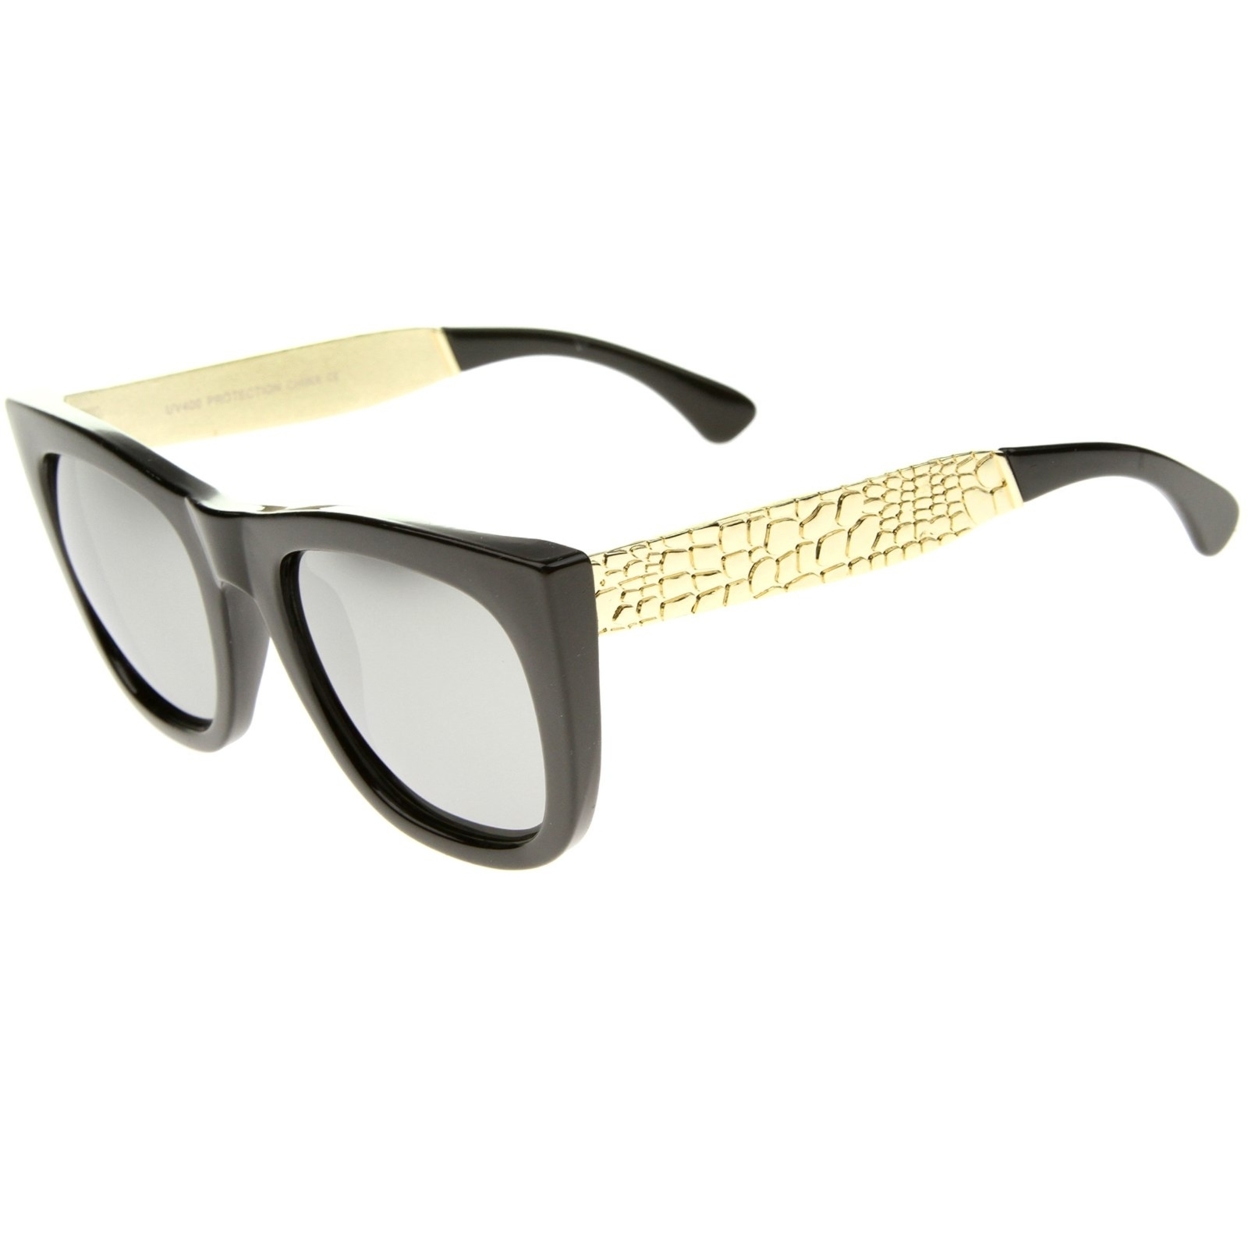 High Fashion Alligator Metal Temple Mirrored Lens Flat Top Sunglasses - Black-Gold / Gold Mirror